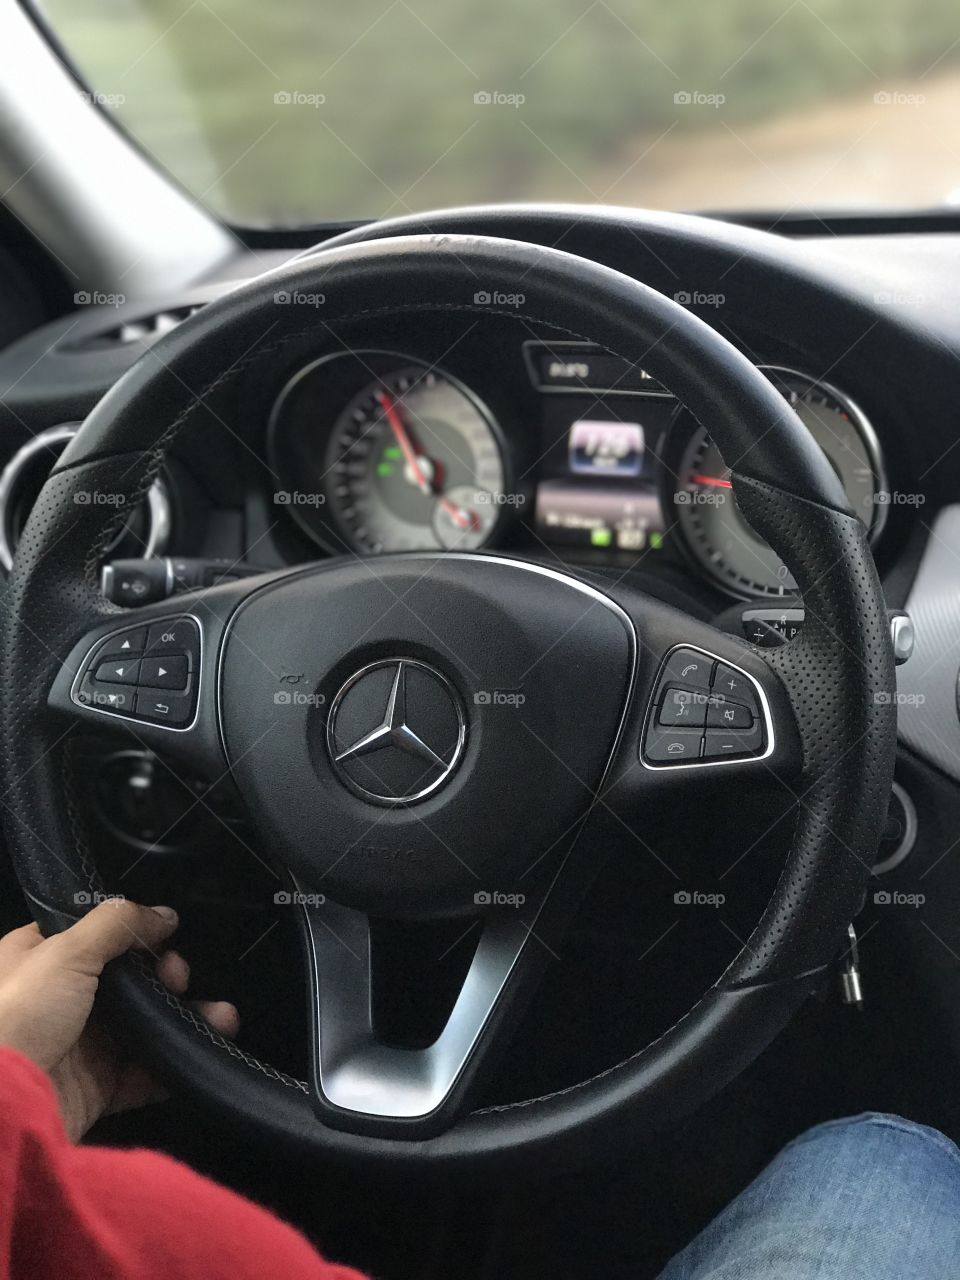 Mercedes benz car luxury 